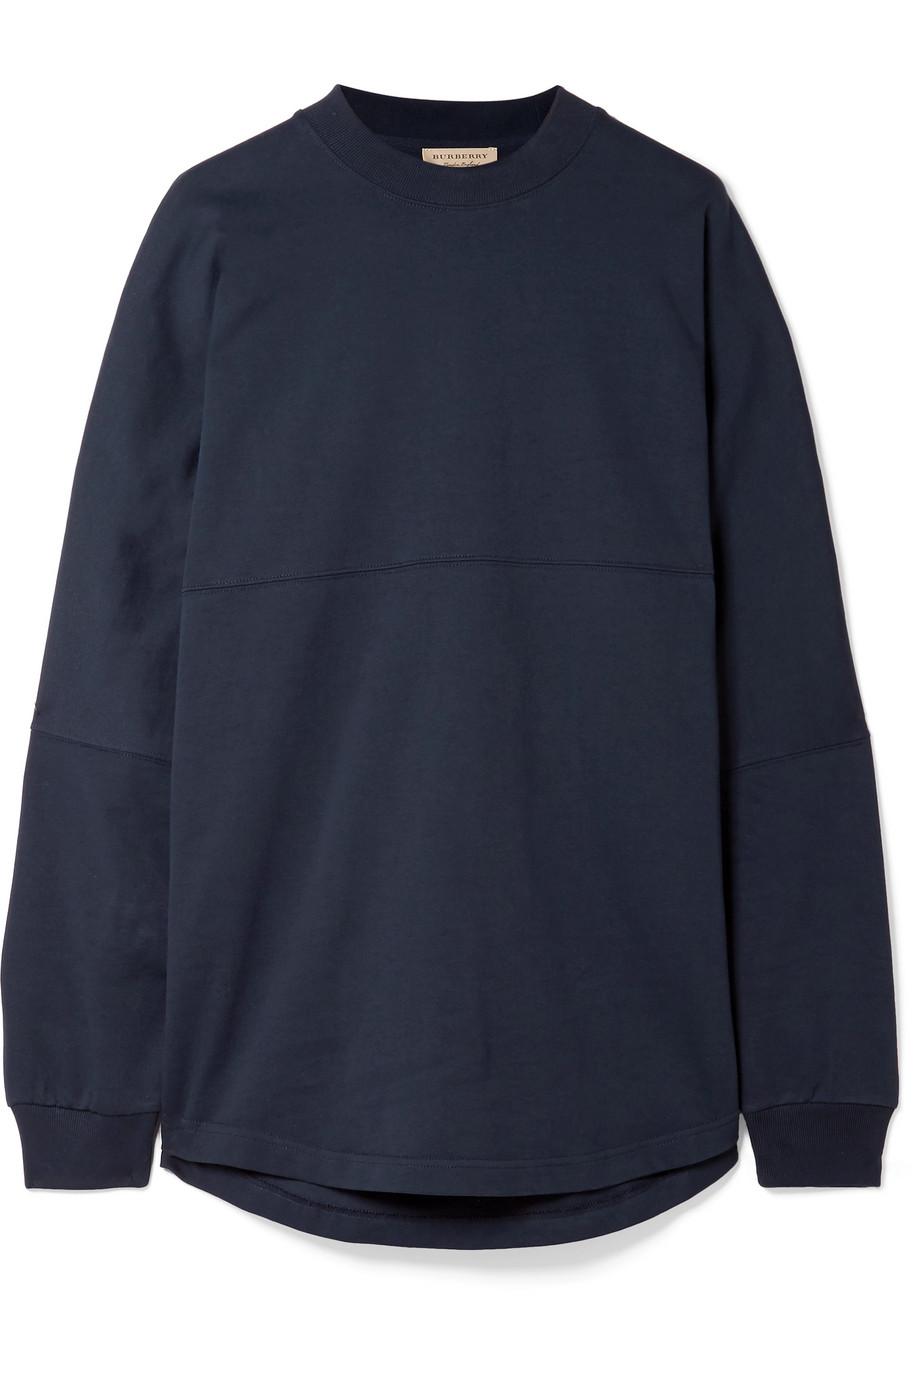 Burberry Oversized Printed Cotton-jersey Sweatshirt in Navy (Blue 